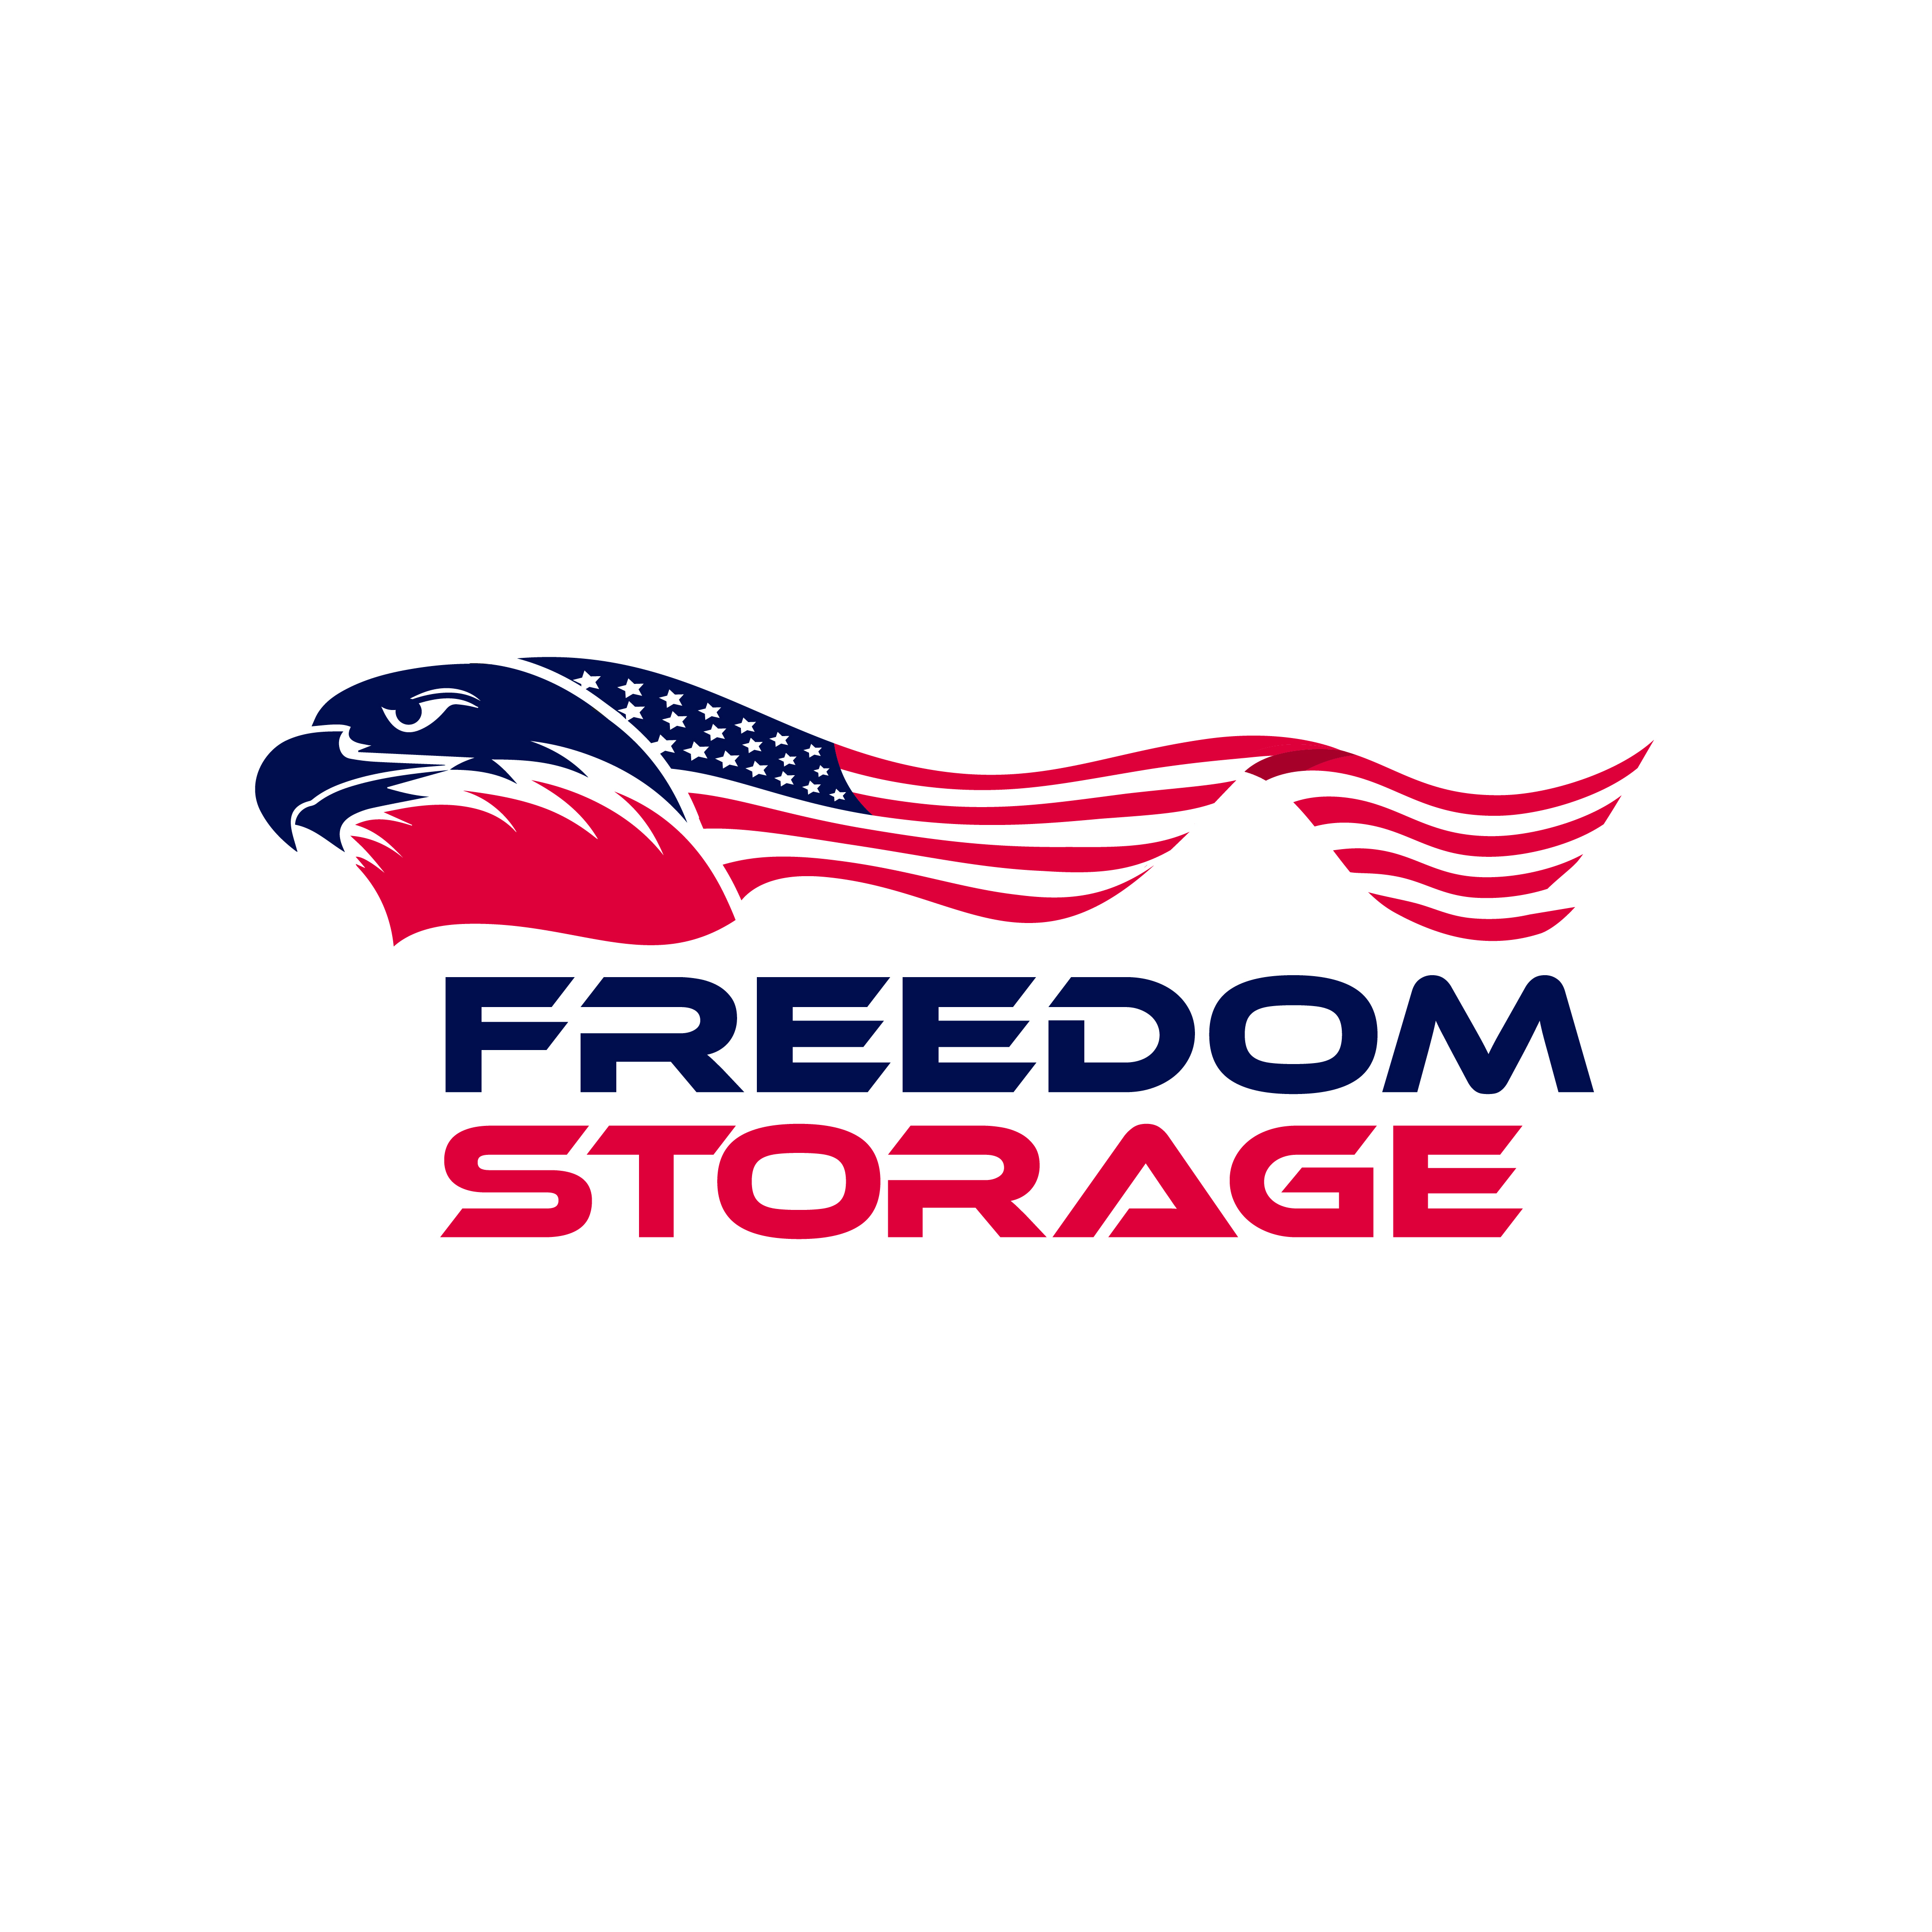 Freedom Storage - Rockwood, TN 37854 - (865)254-5455 | ShowMeLocal.com